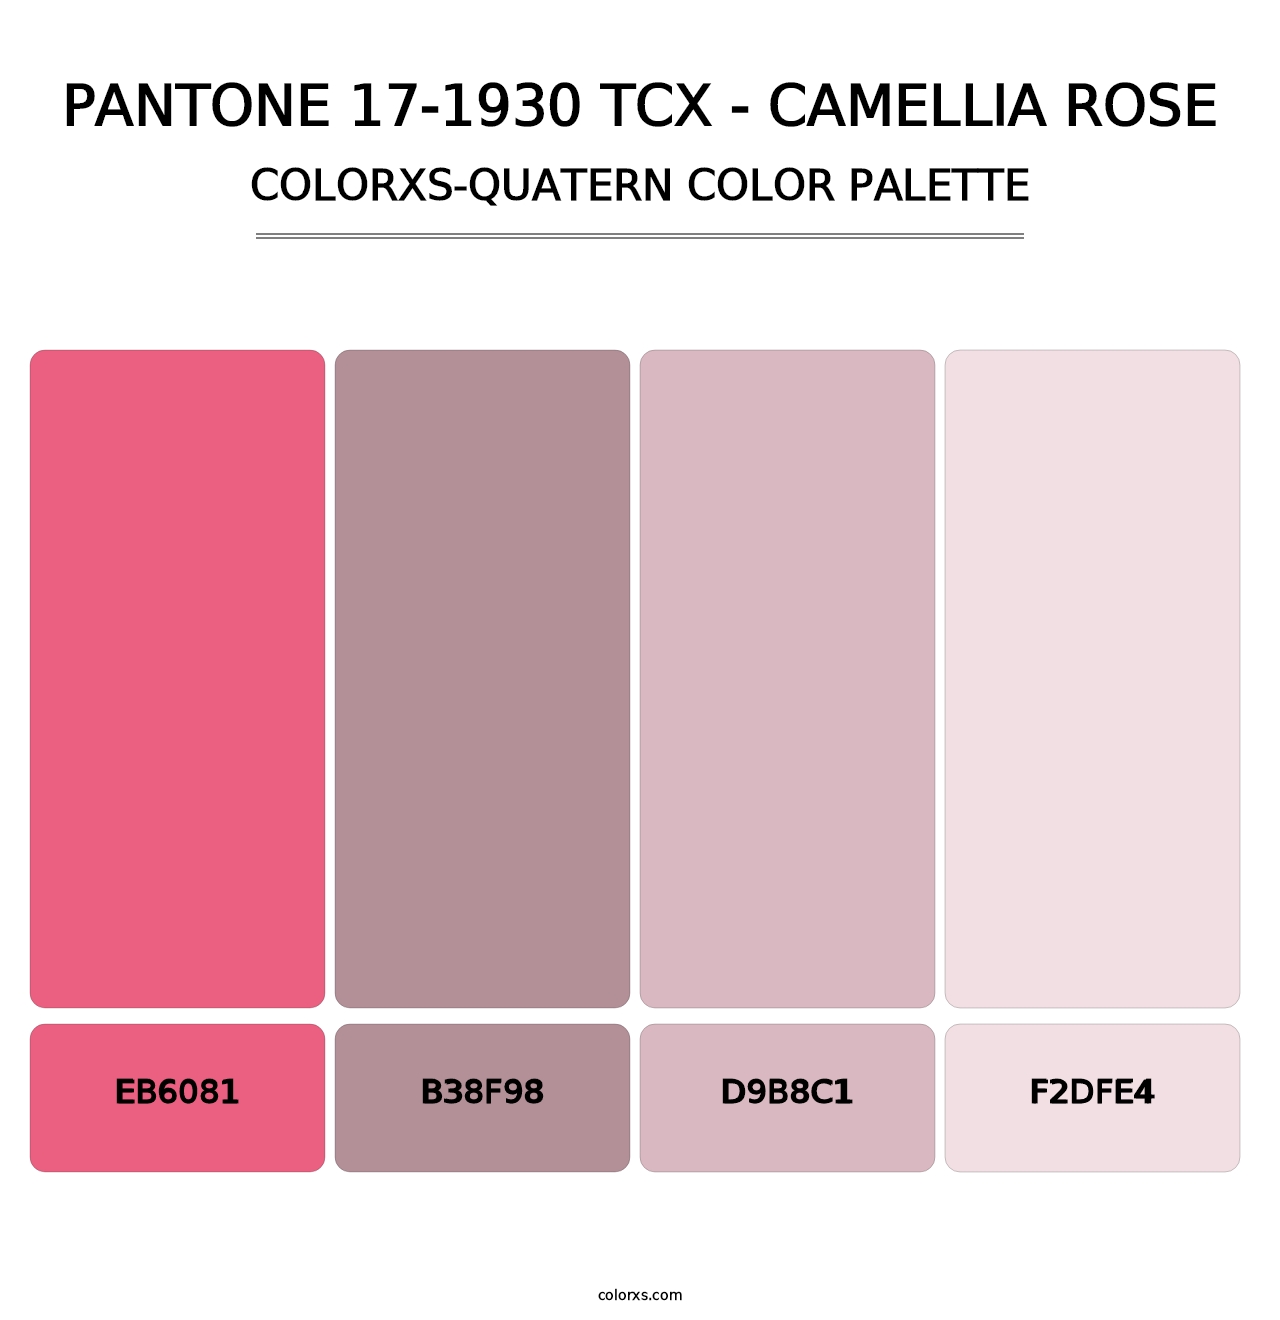 PANTONE 17-1930 TCX - Camellia Rose - Colorxs Quatern Palette